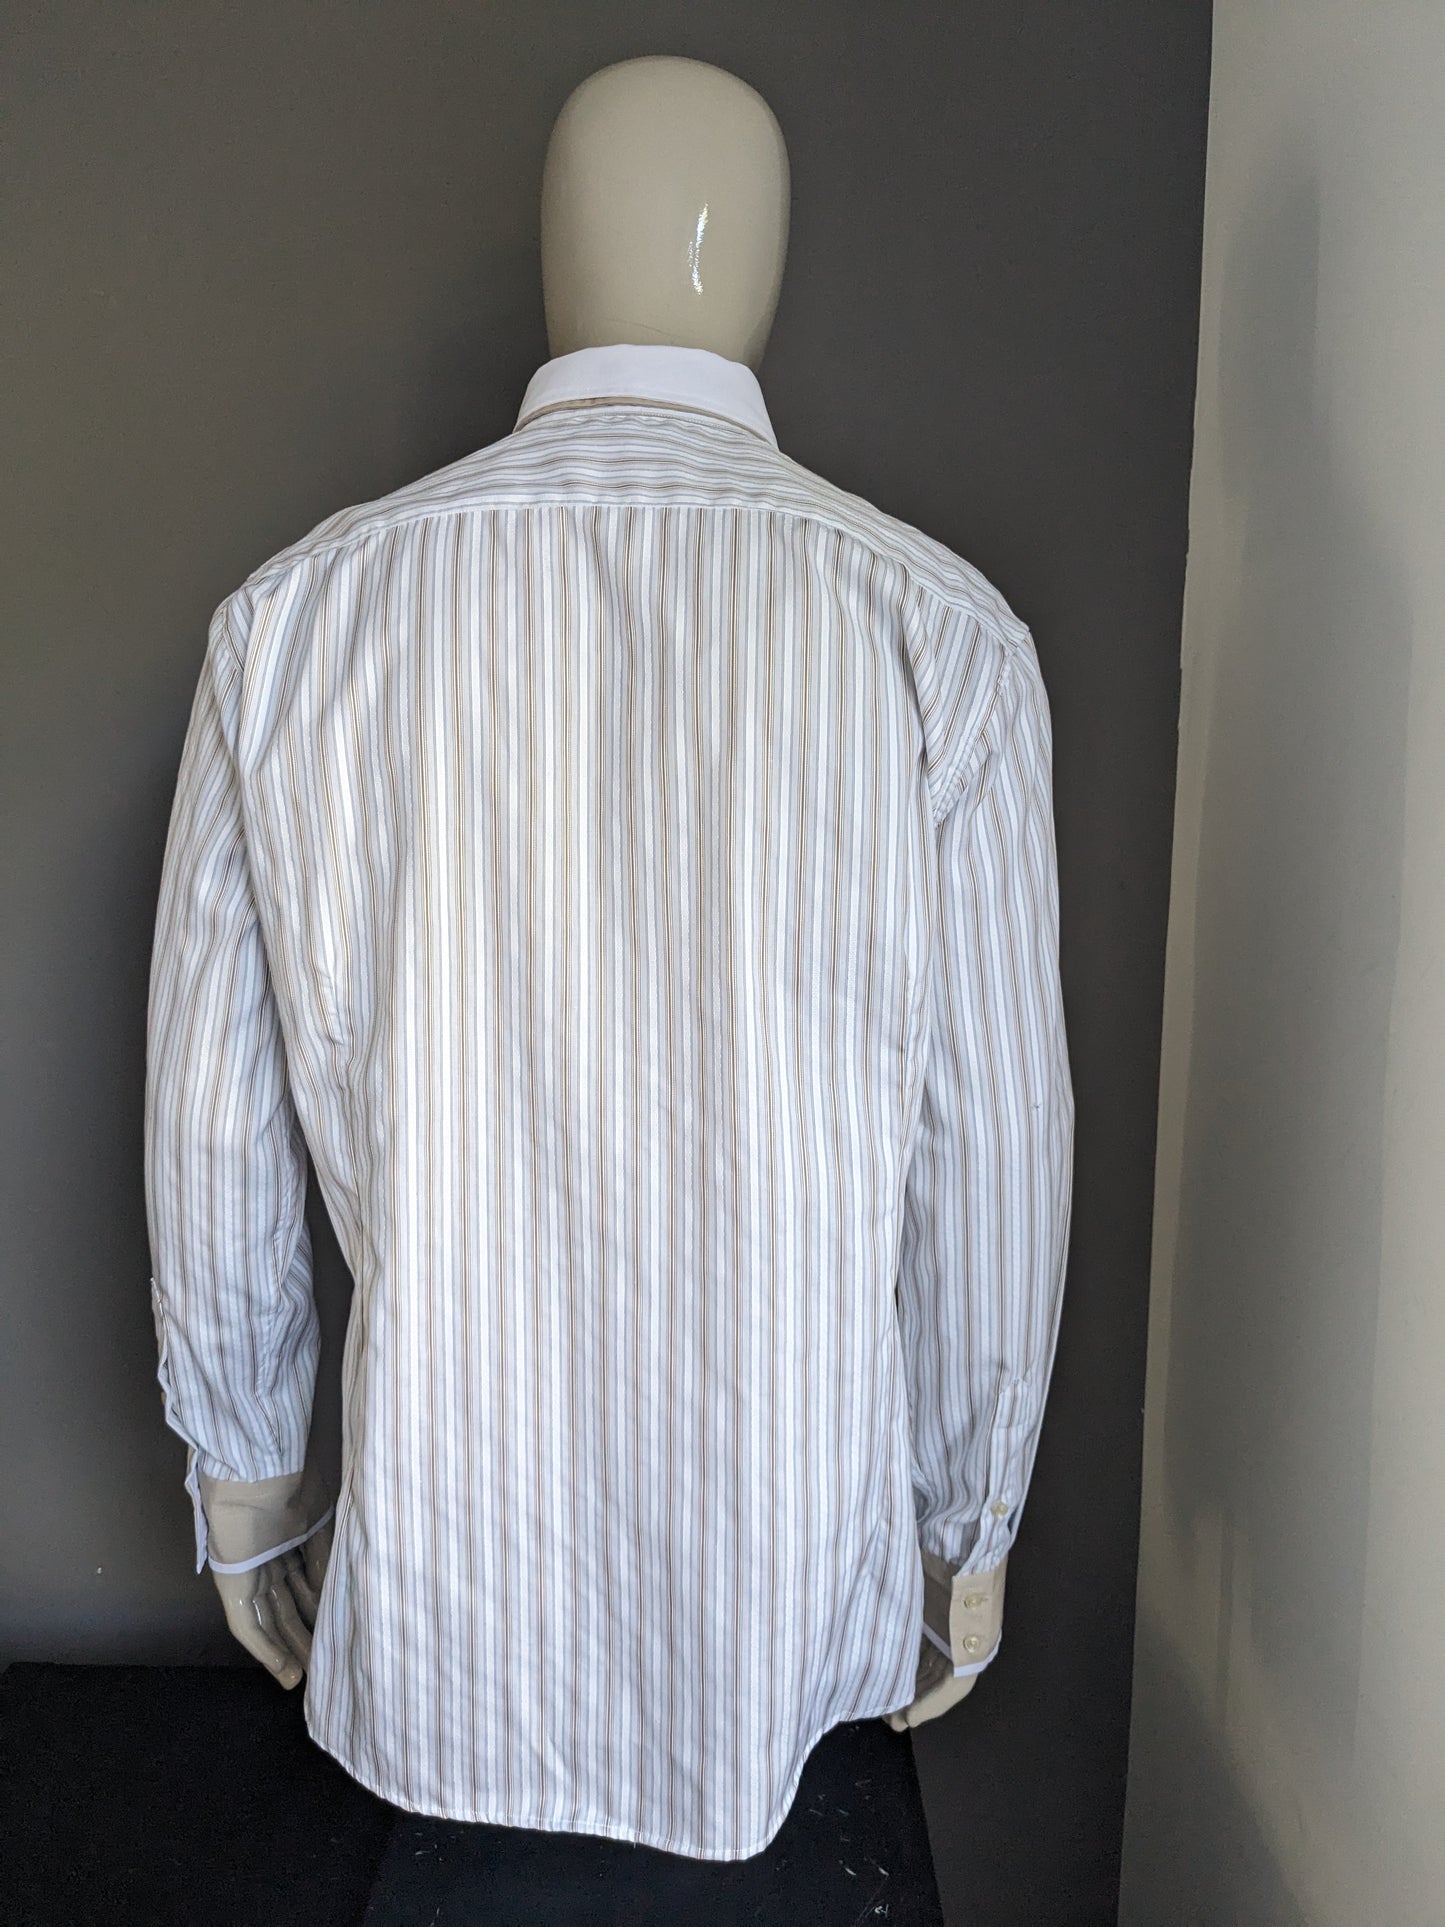 Turunç shirt with double collar. White blue brown striped. Size XL / XXL.